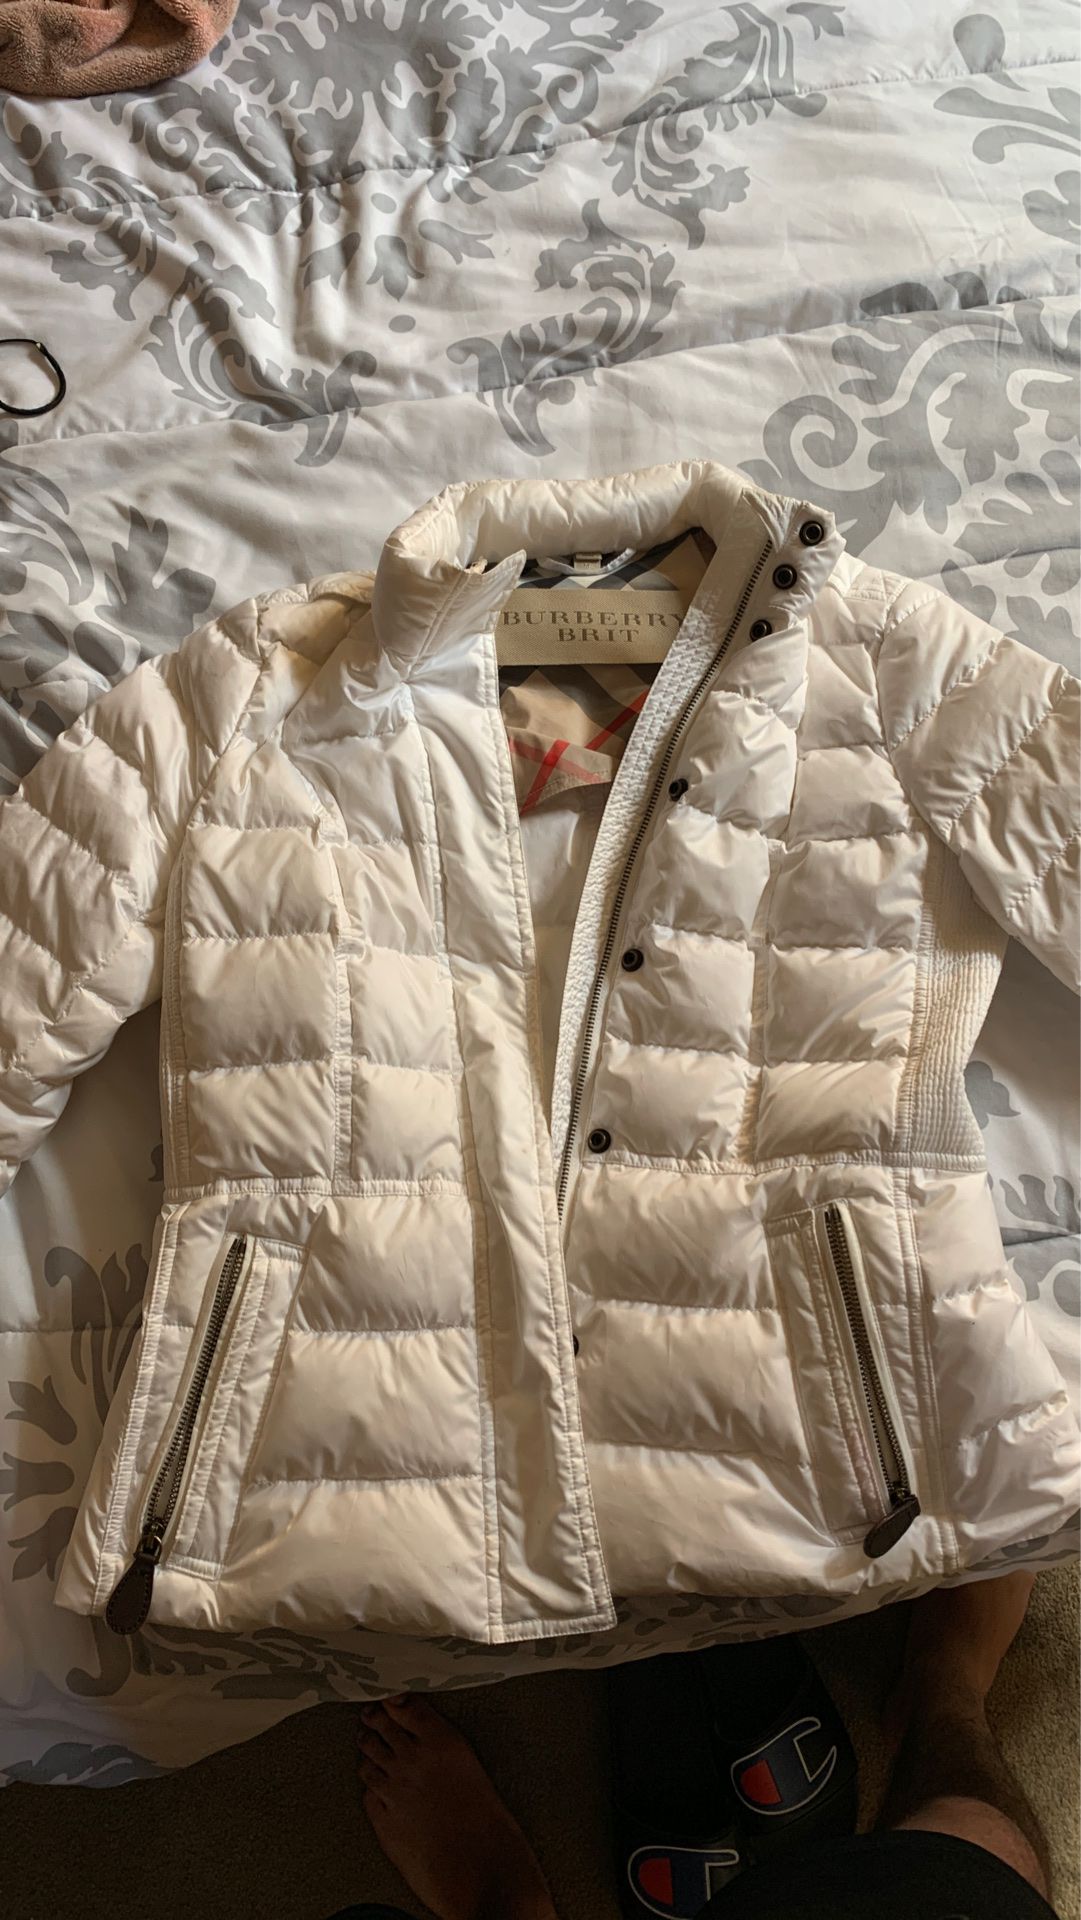 Burberry Brit women’s jacket size medium